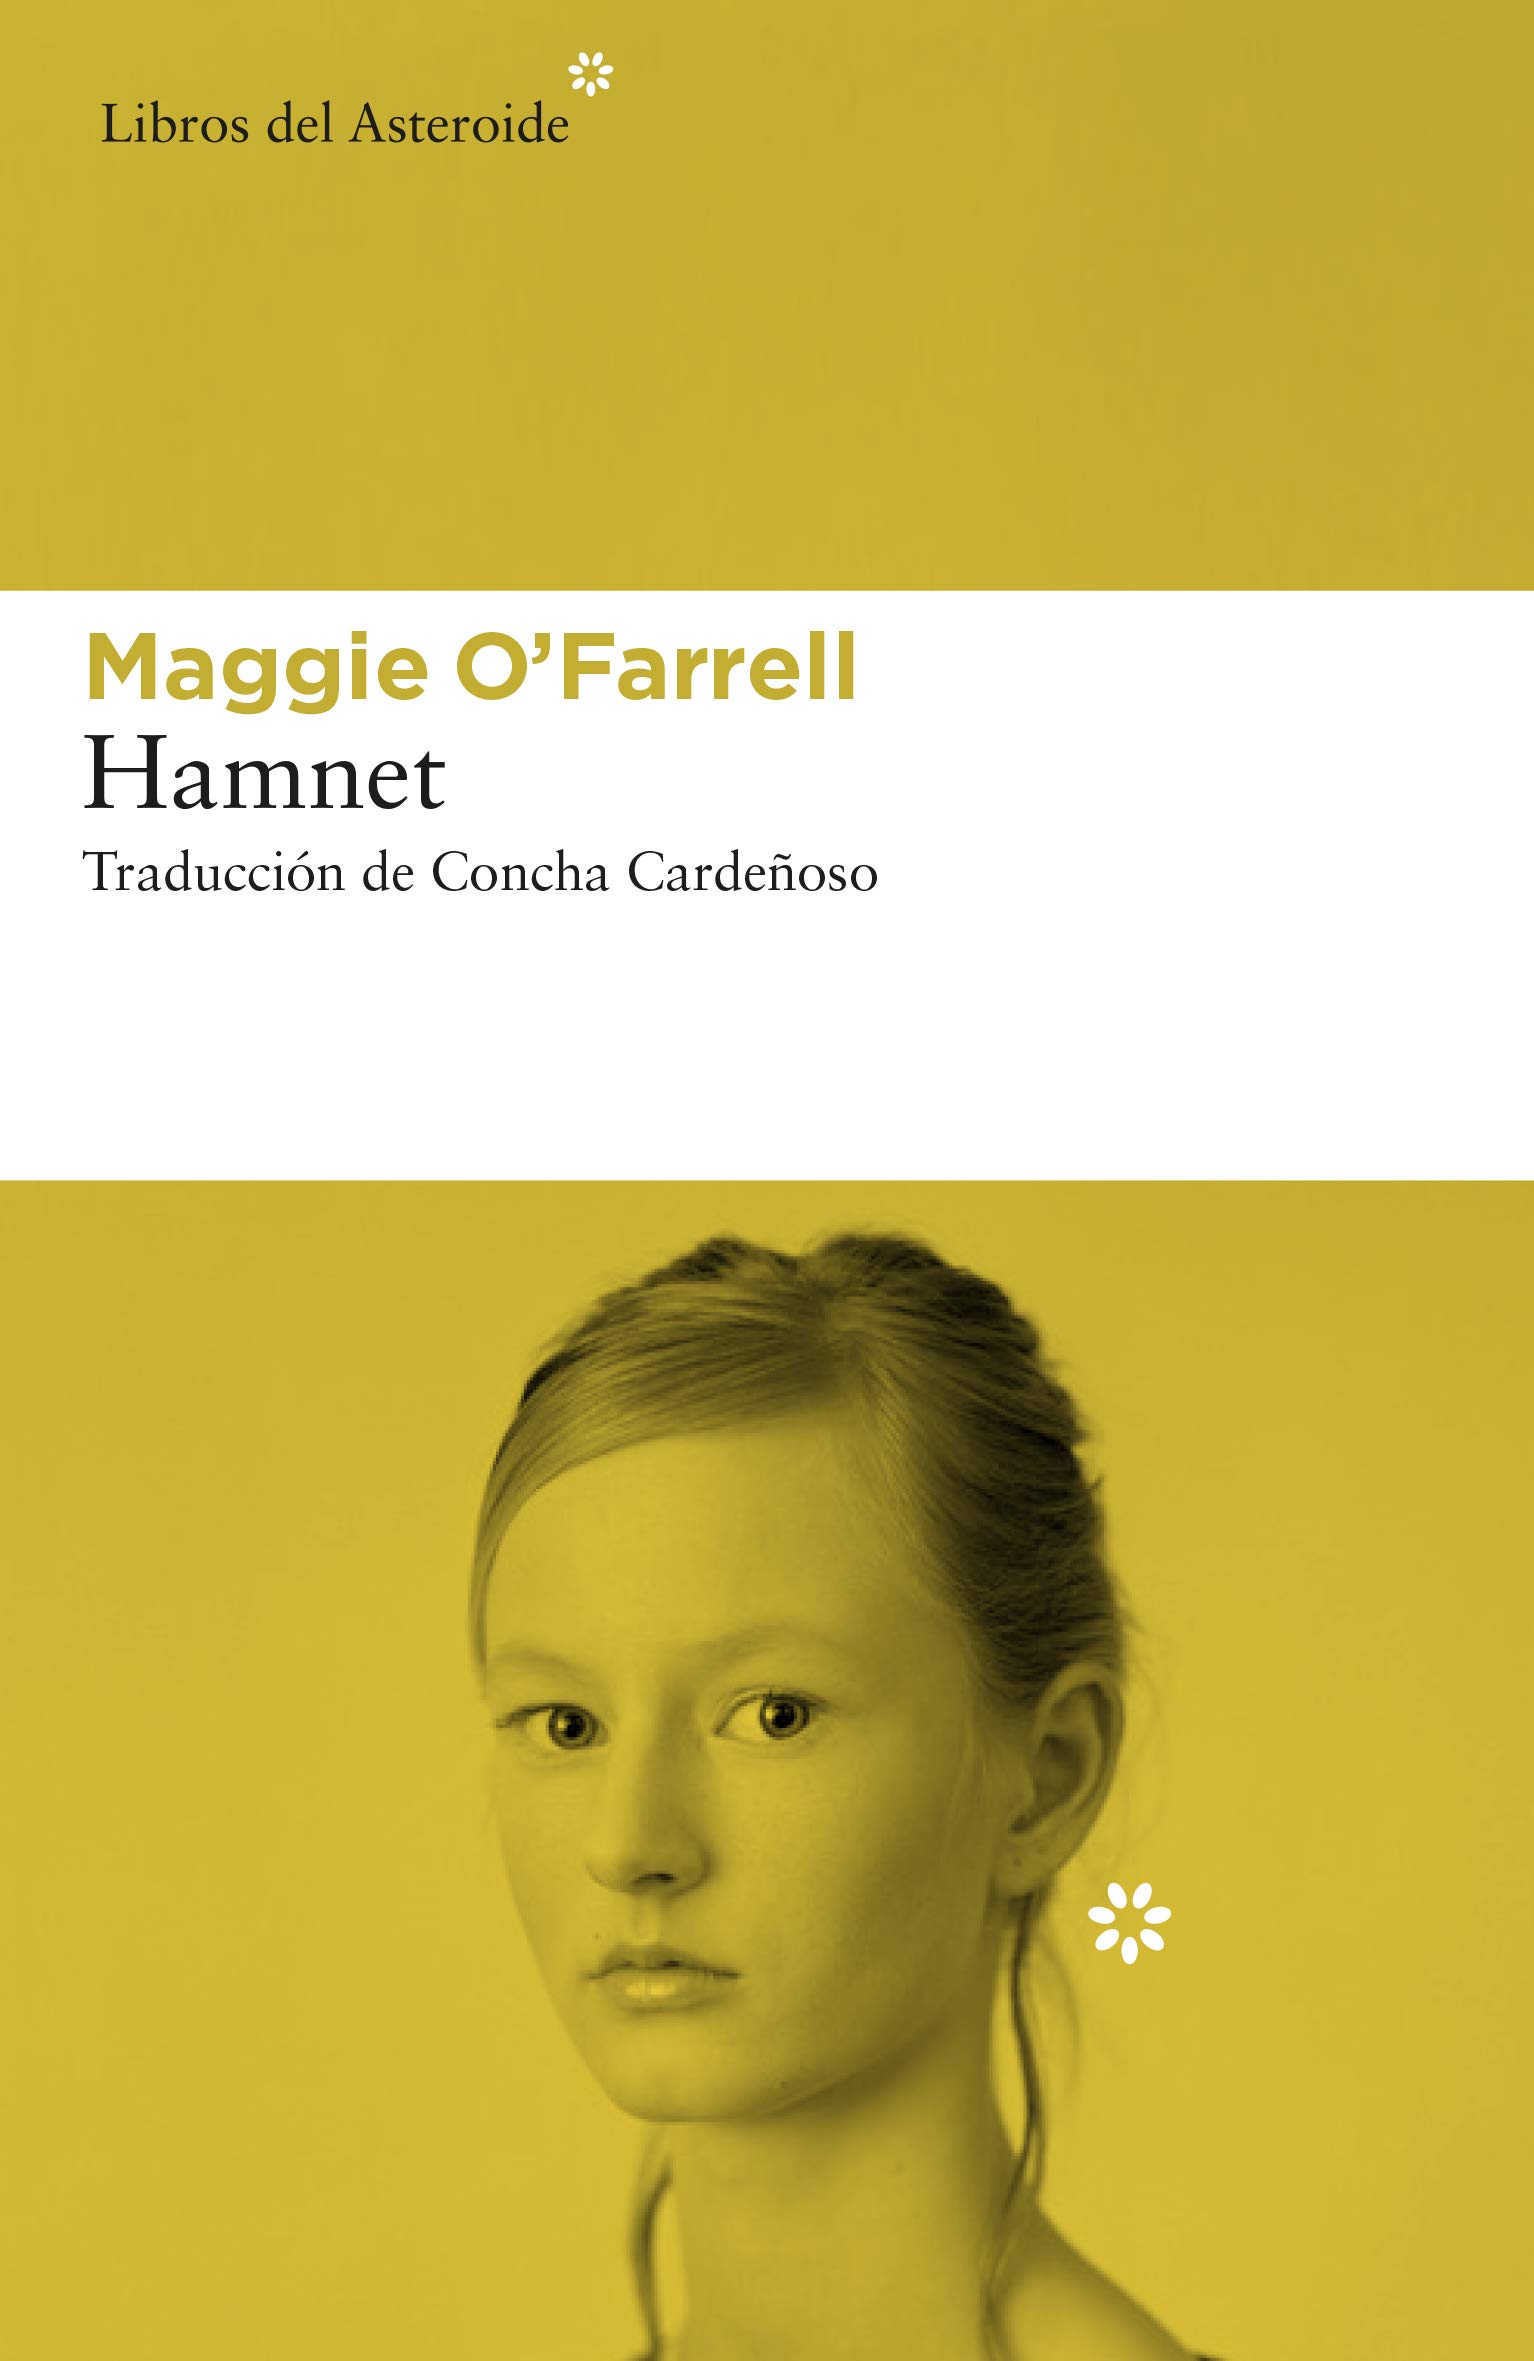 Maggie O'Farrell, Concha Cardeñoso: Hamnet (2021, Libros del Asteroide)